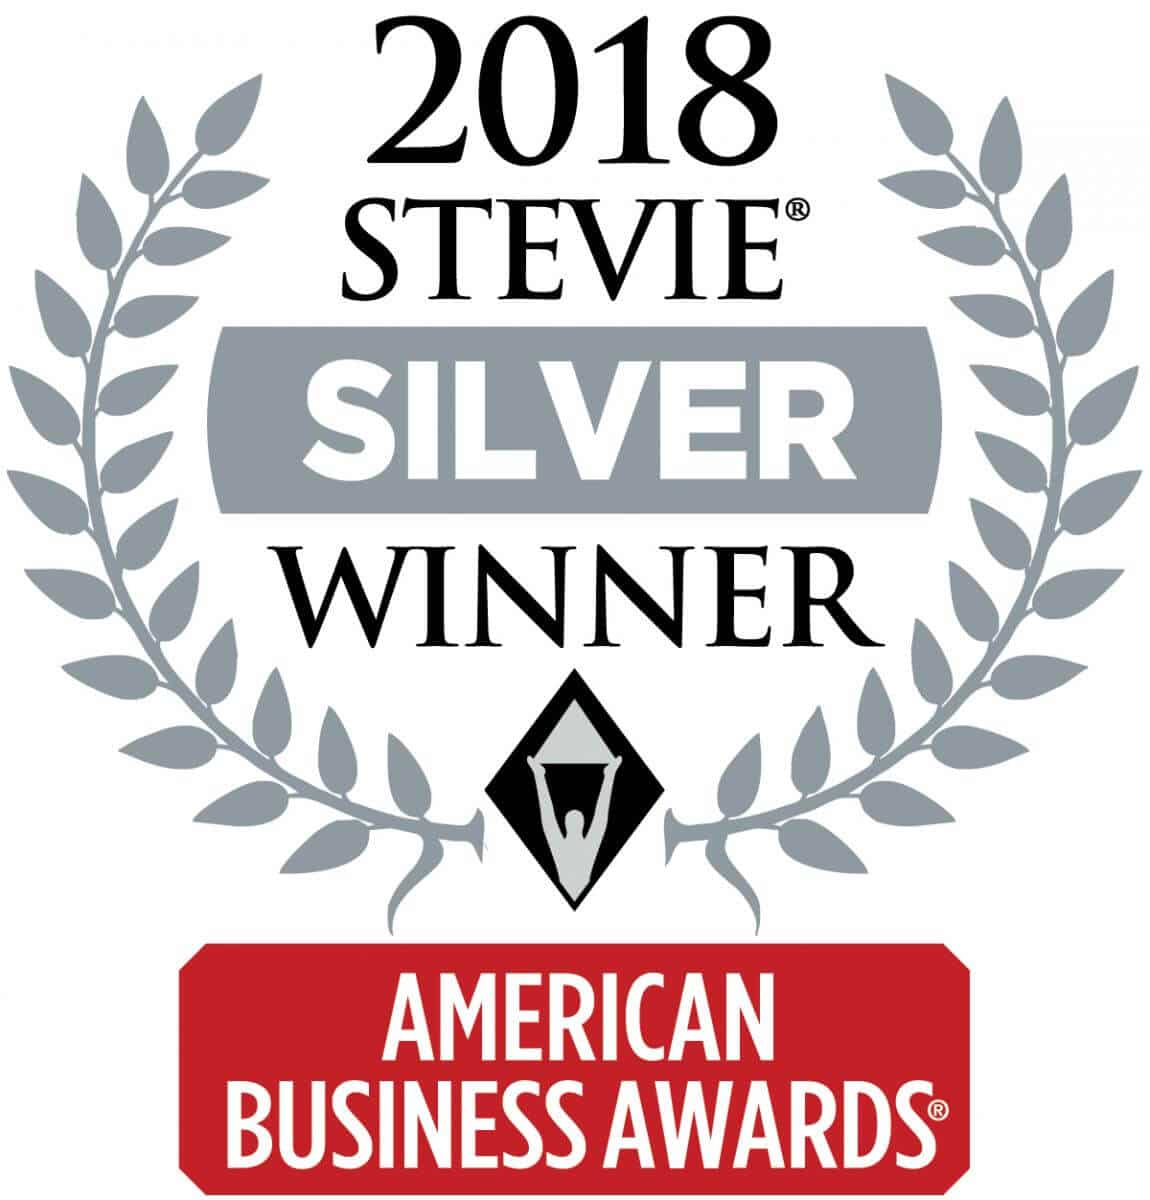 2018 Stevie Silver Winner: American Business Awards